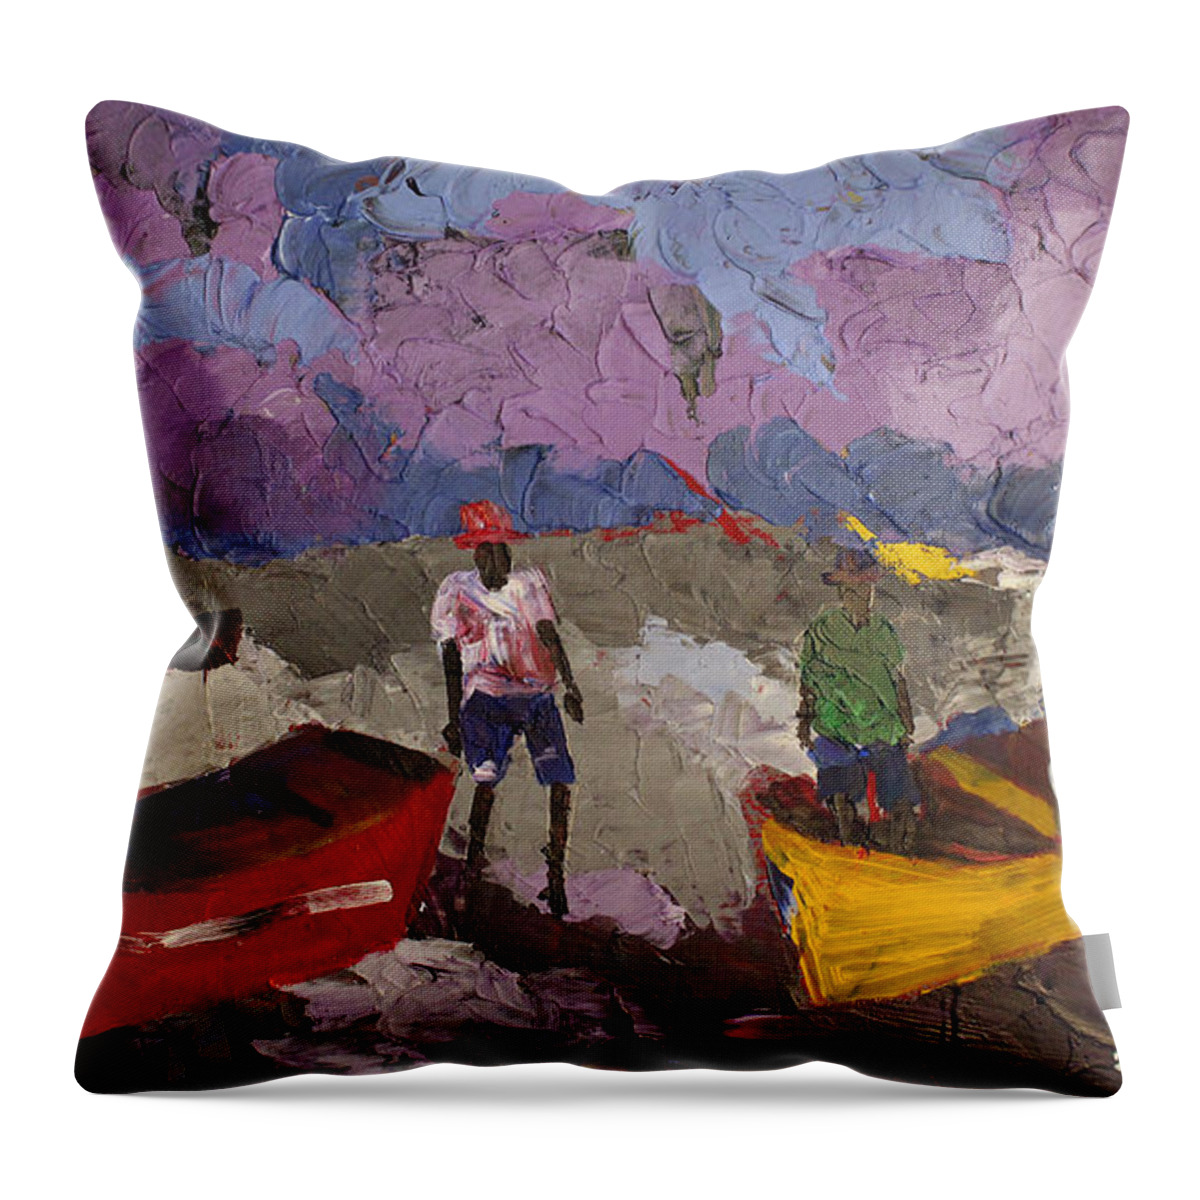 African Art Throw Pillow featuring the painting Dark Purple Fishing Sky by Tarizai Munsvhenga